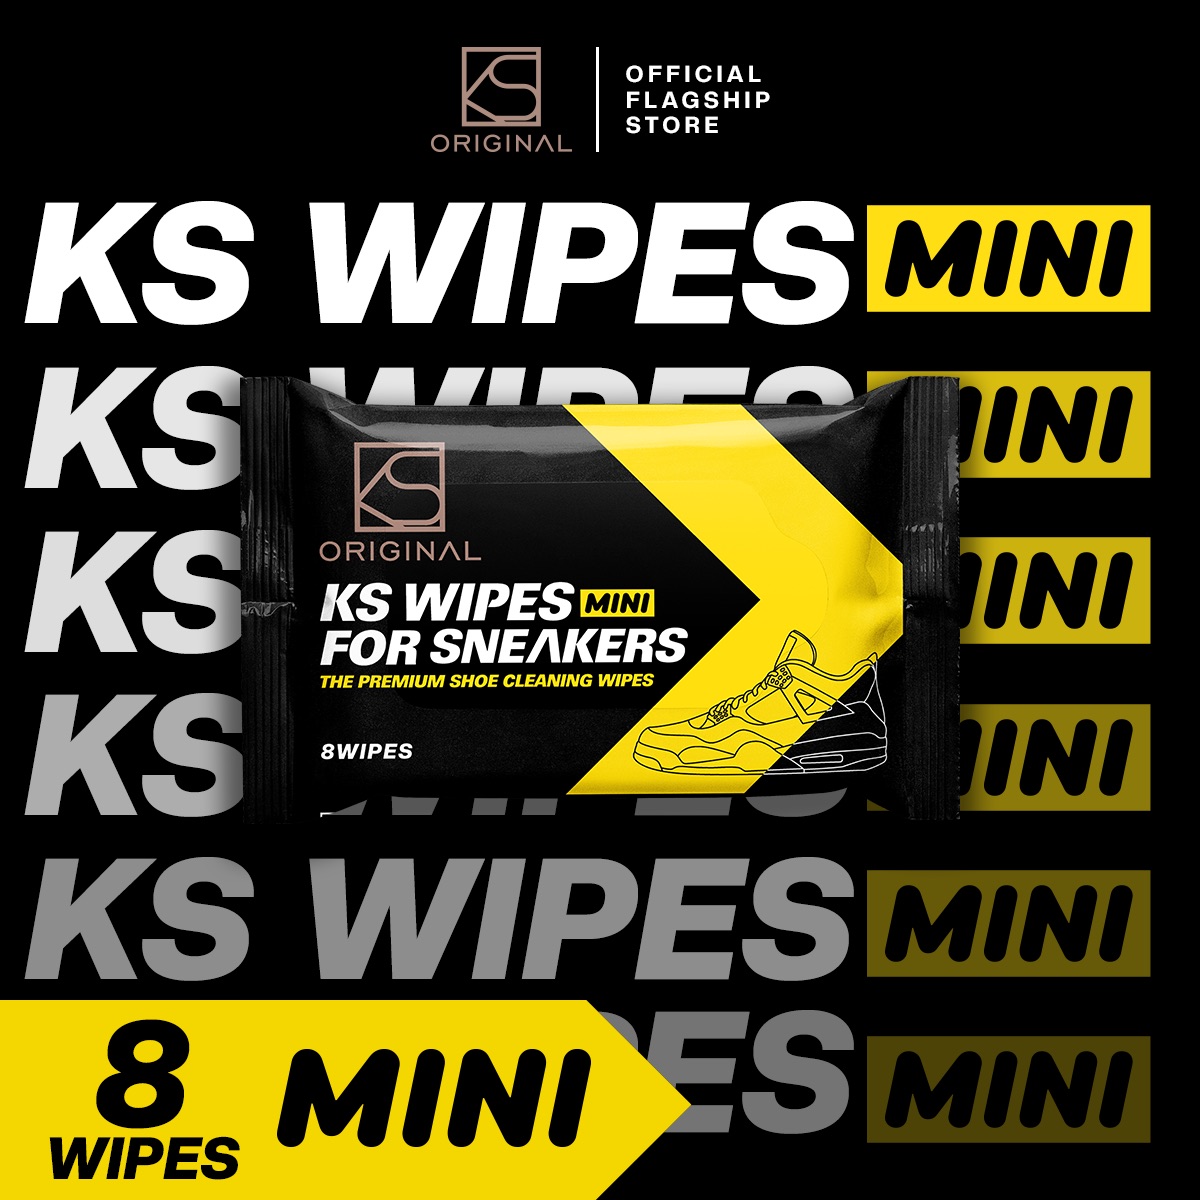 KS Wipes Mini - White Shoe Care Essential